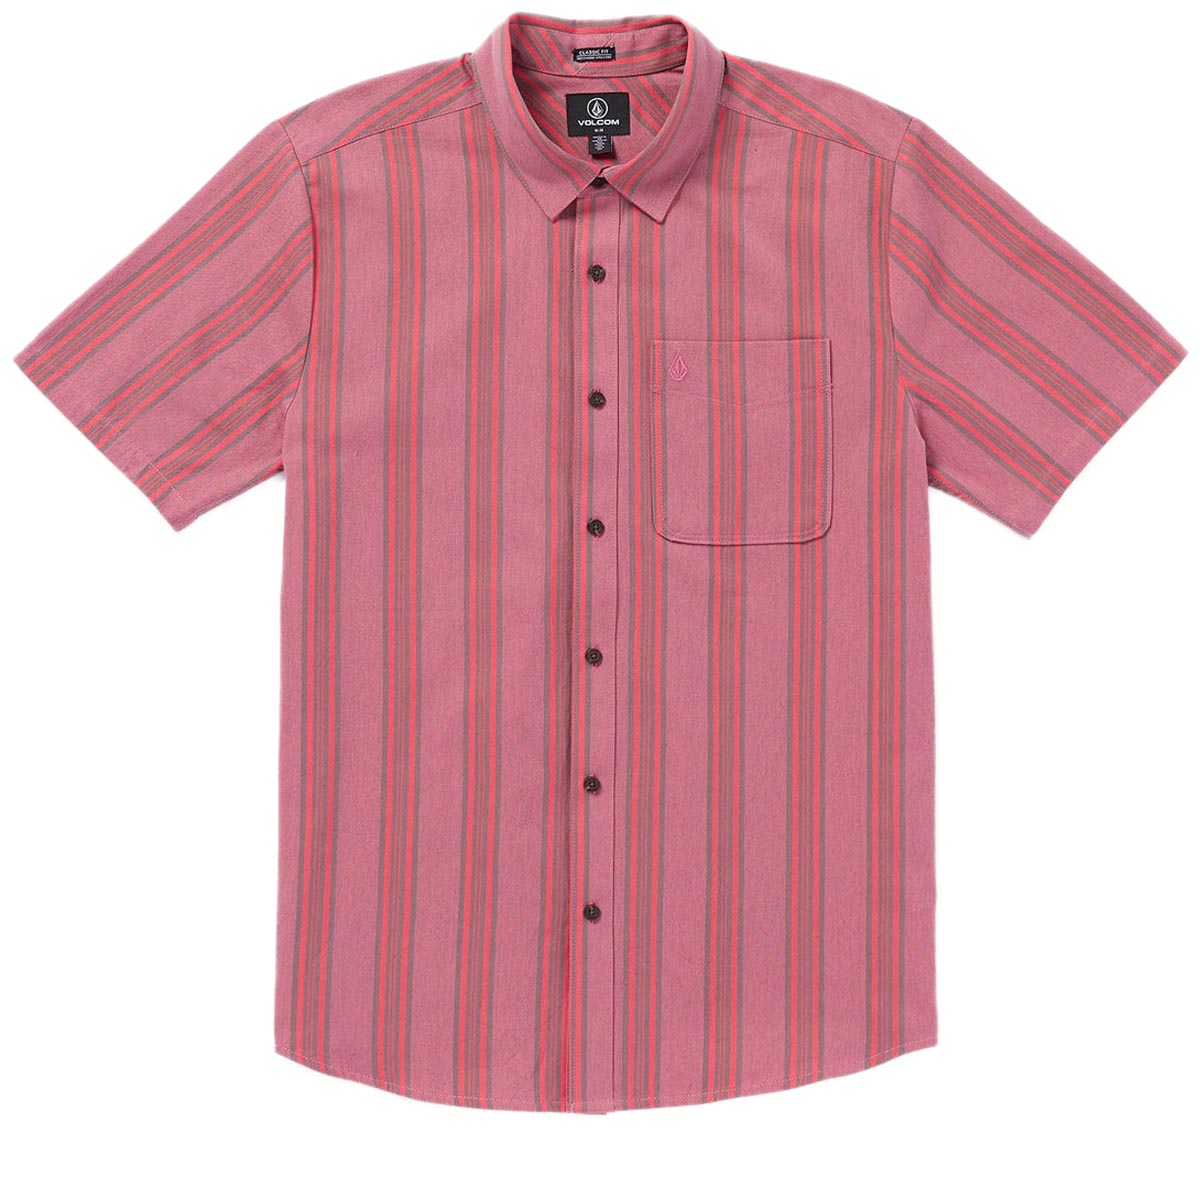 Volcom Newbar Stripe Shirt - Washed Ruby image 4